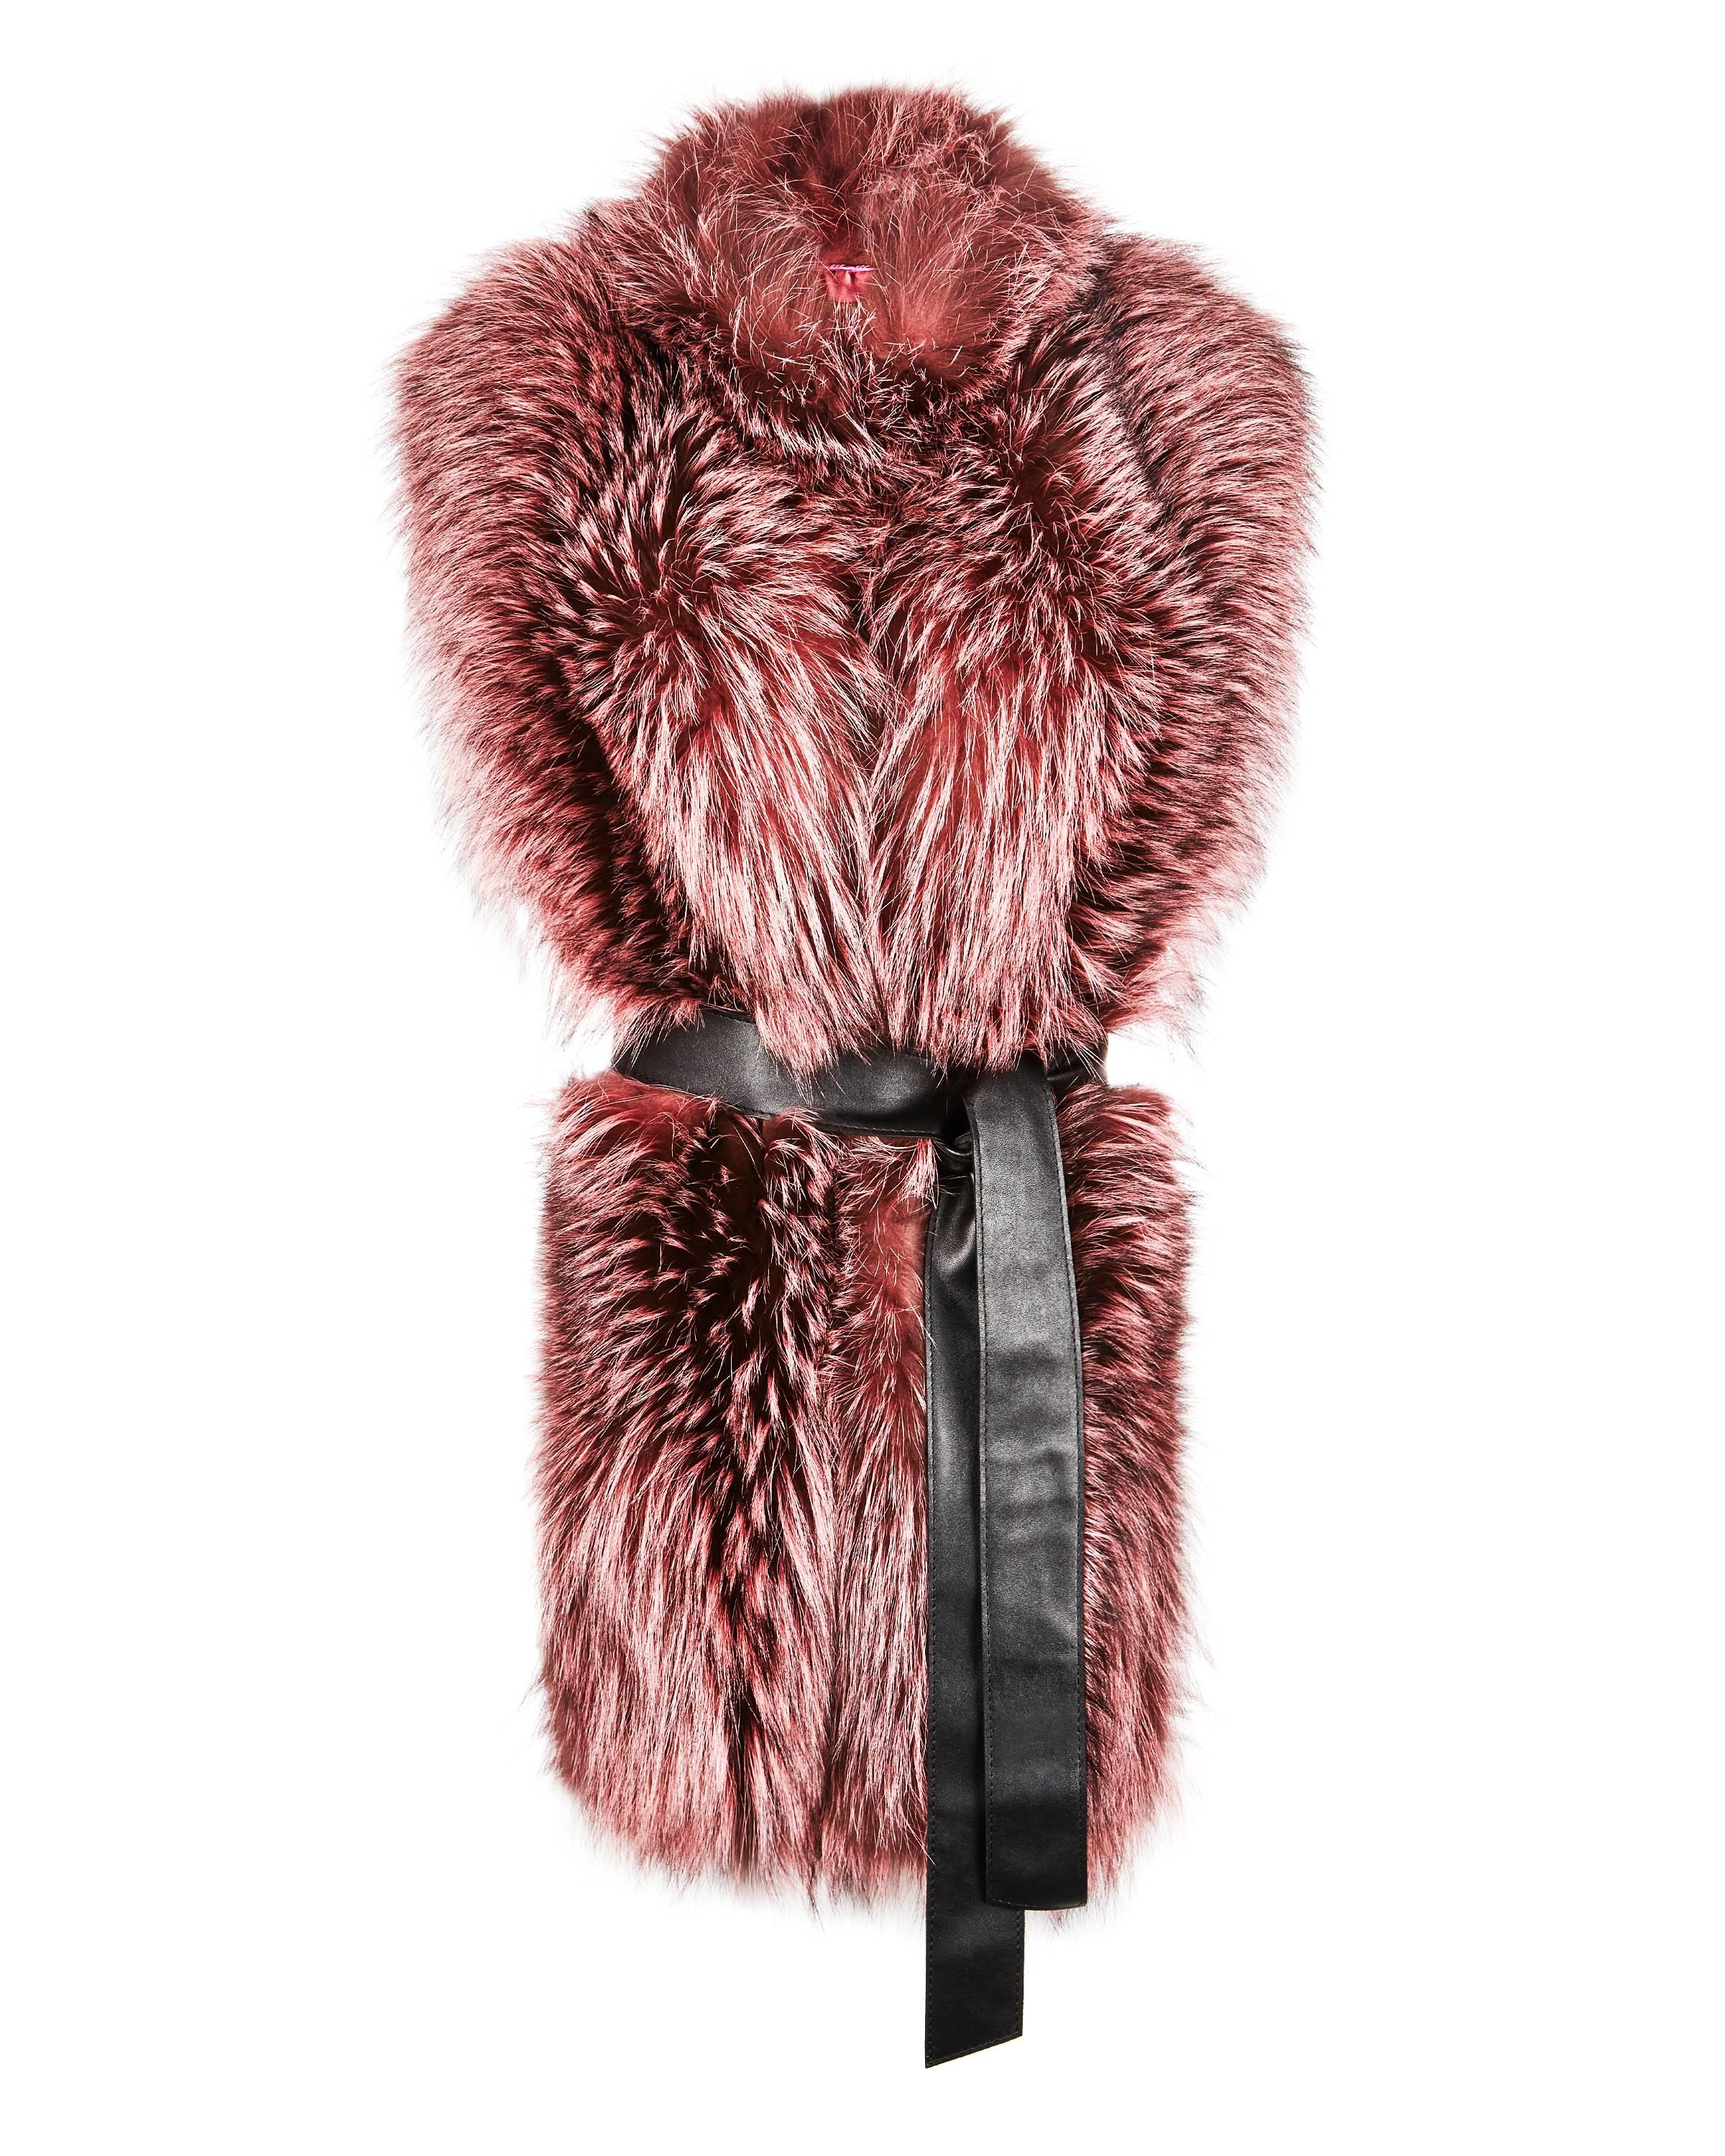 Verheyen London Nehru Collar Stole Rose Quartz Pink Fox Fur - Brand New (RRP Price)

The perfect Valentines gift for someone special - free monogramming on 100% silk lining on request. 
The Nehru Collar Stole is Verheyen London’s wardrobe “must